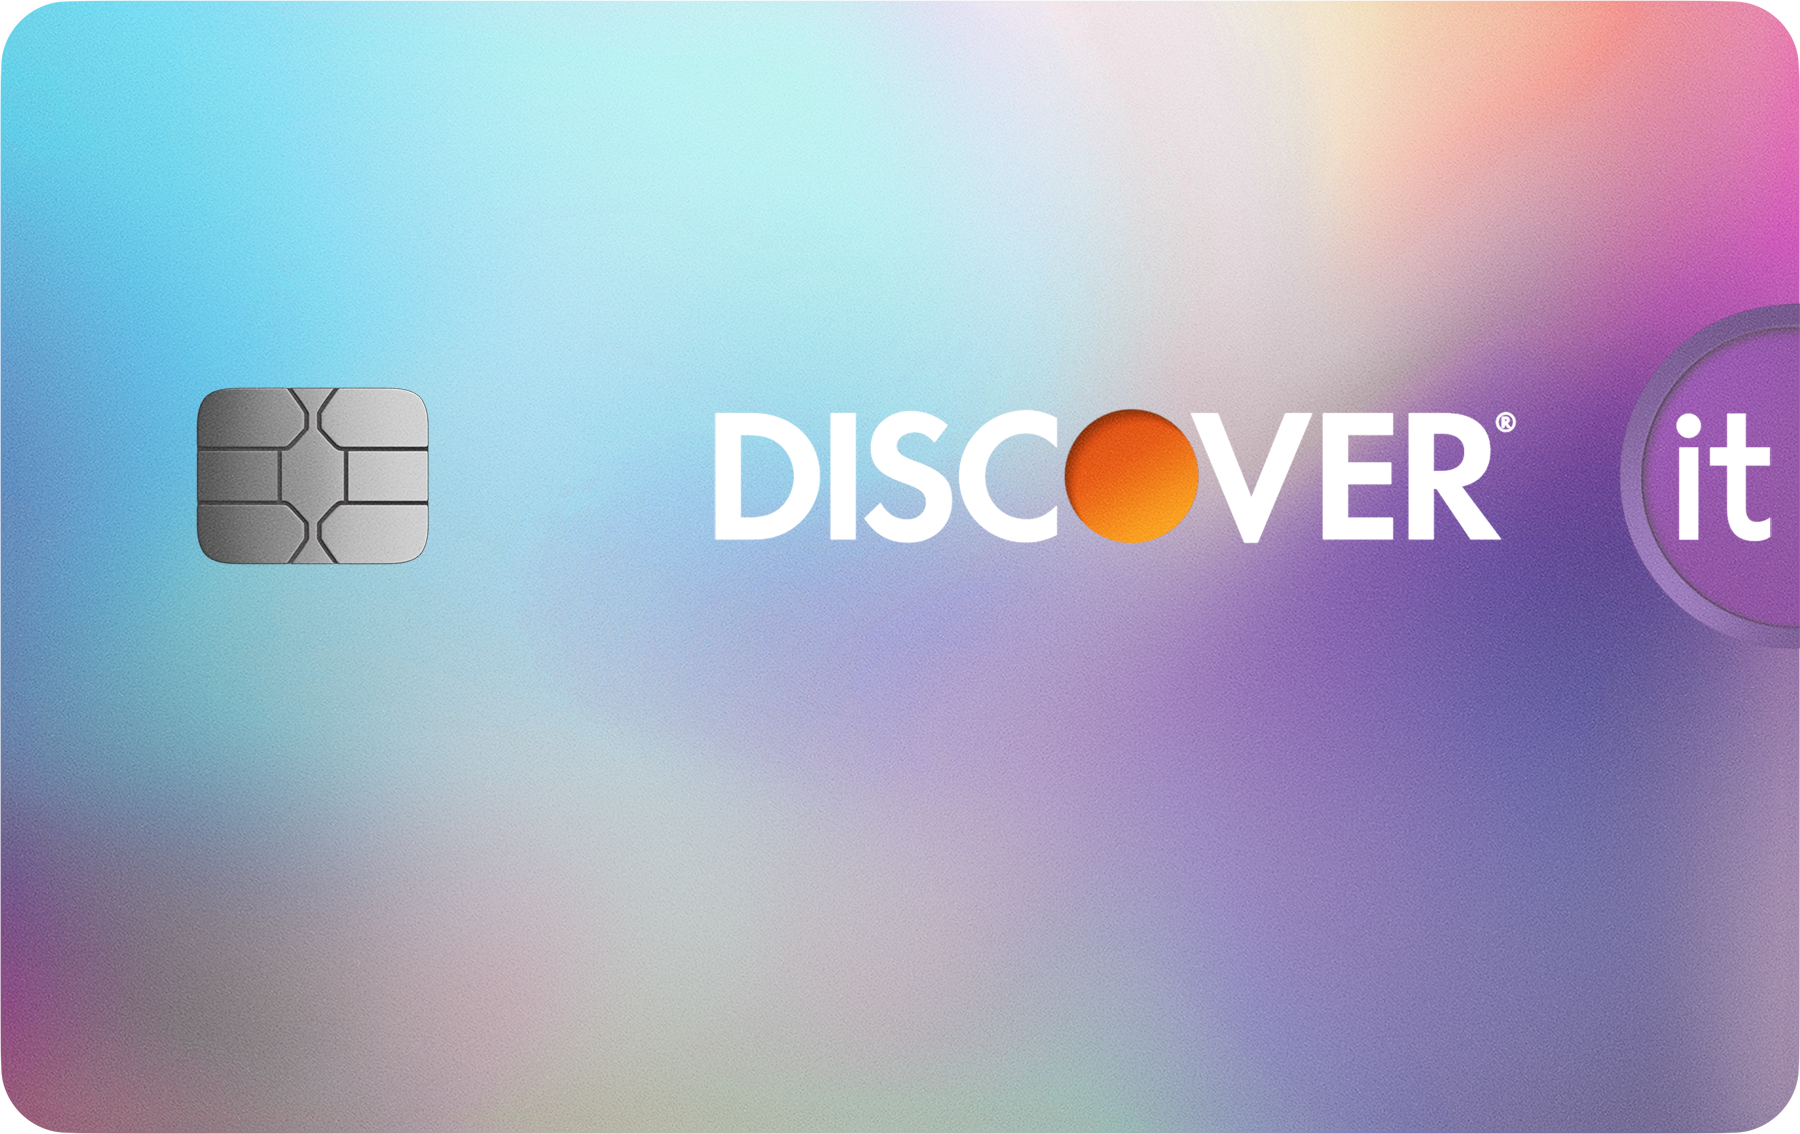 discover card logo high resolution